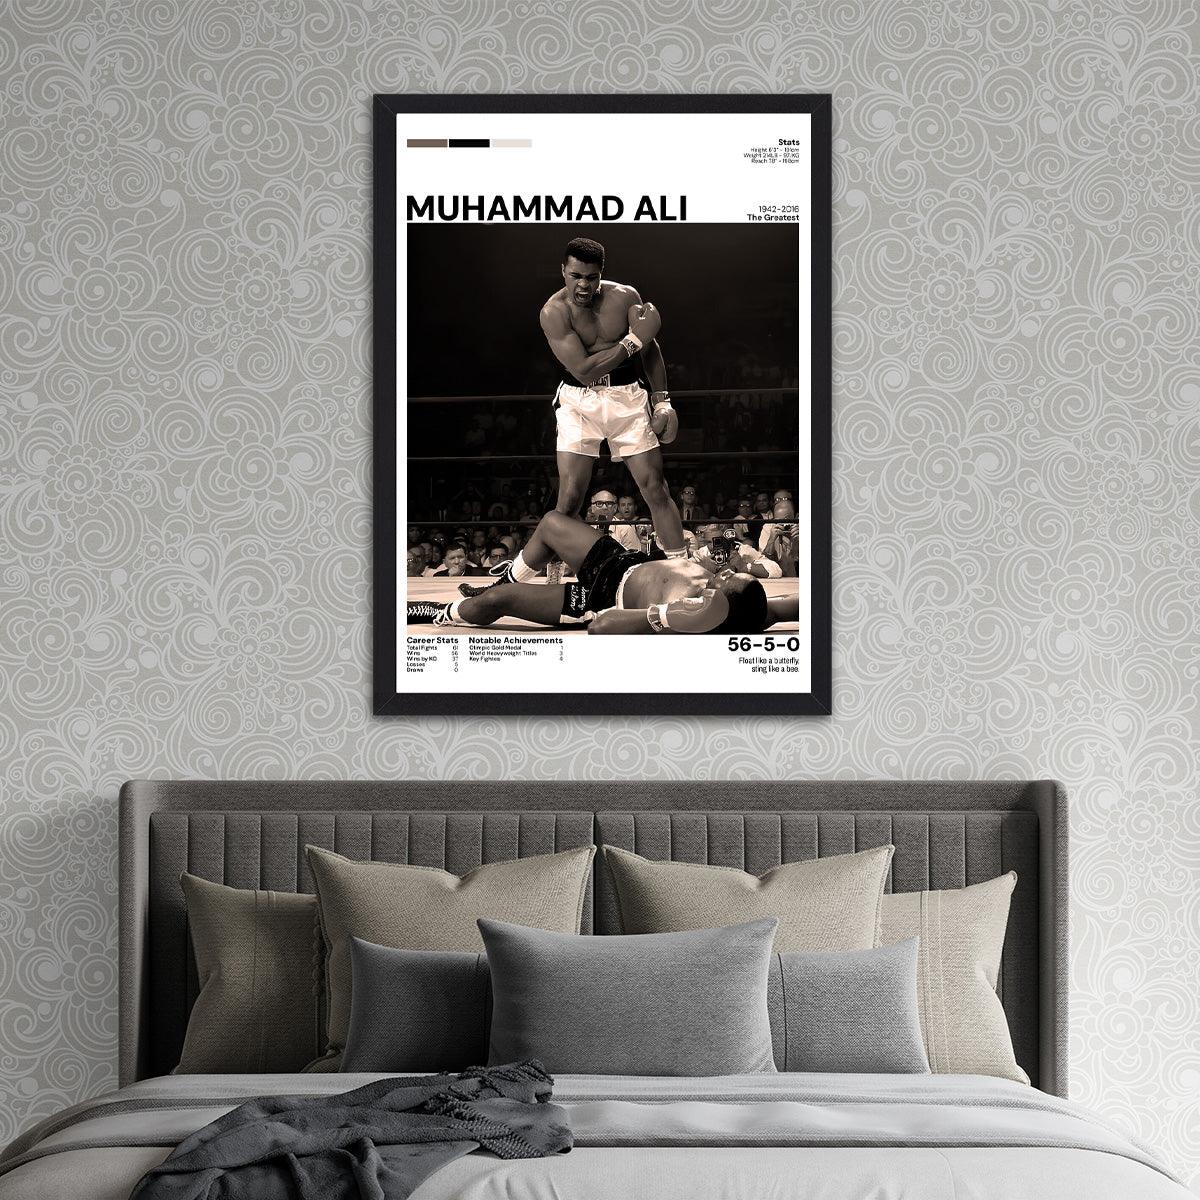 The Greatest: Muhammad Ali - PixMagic